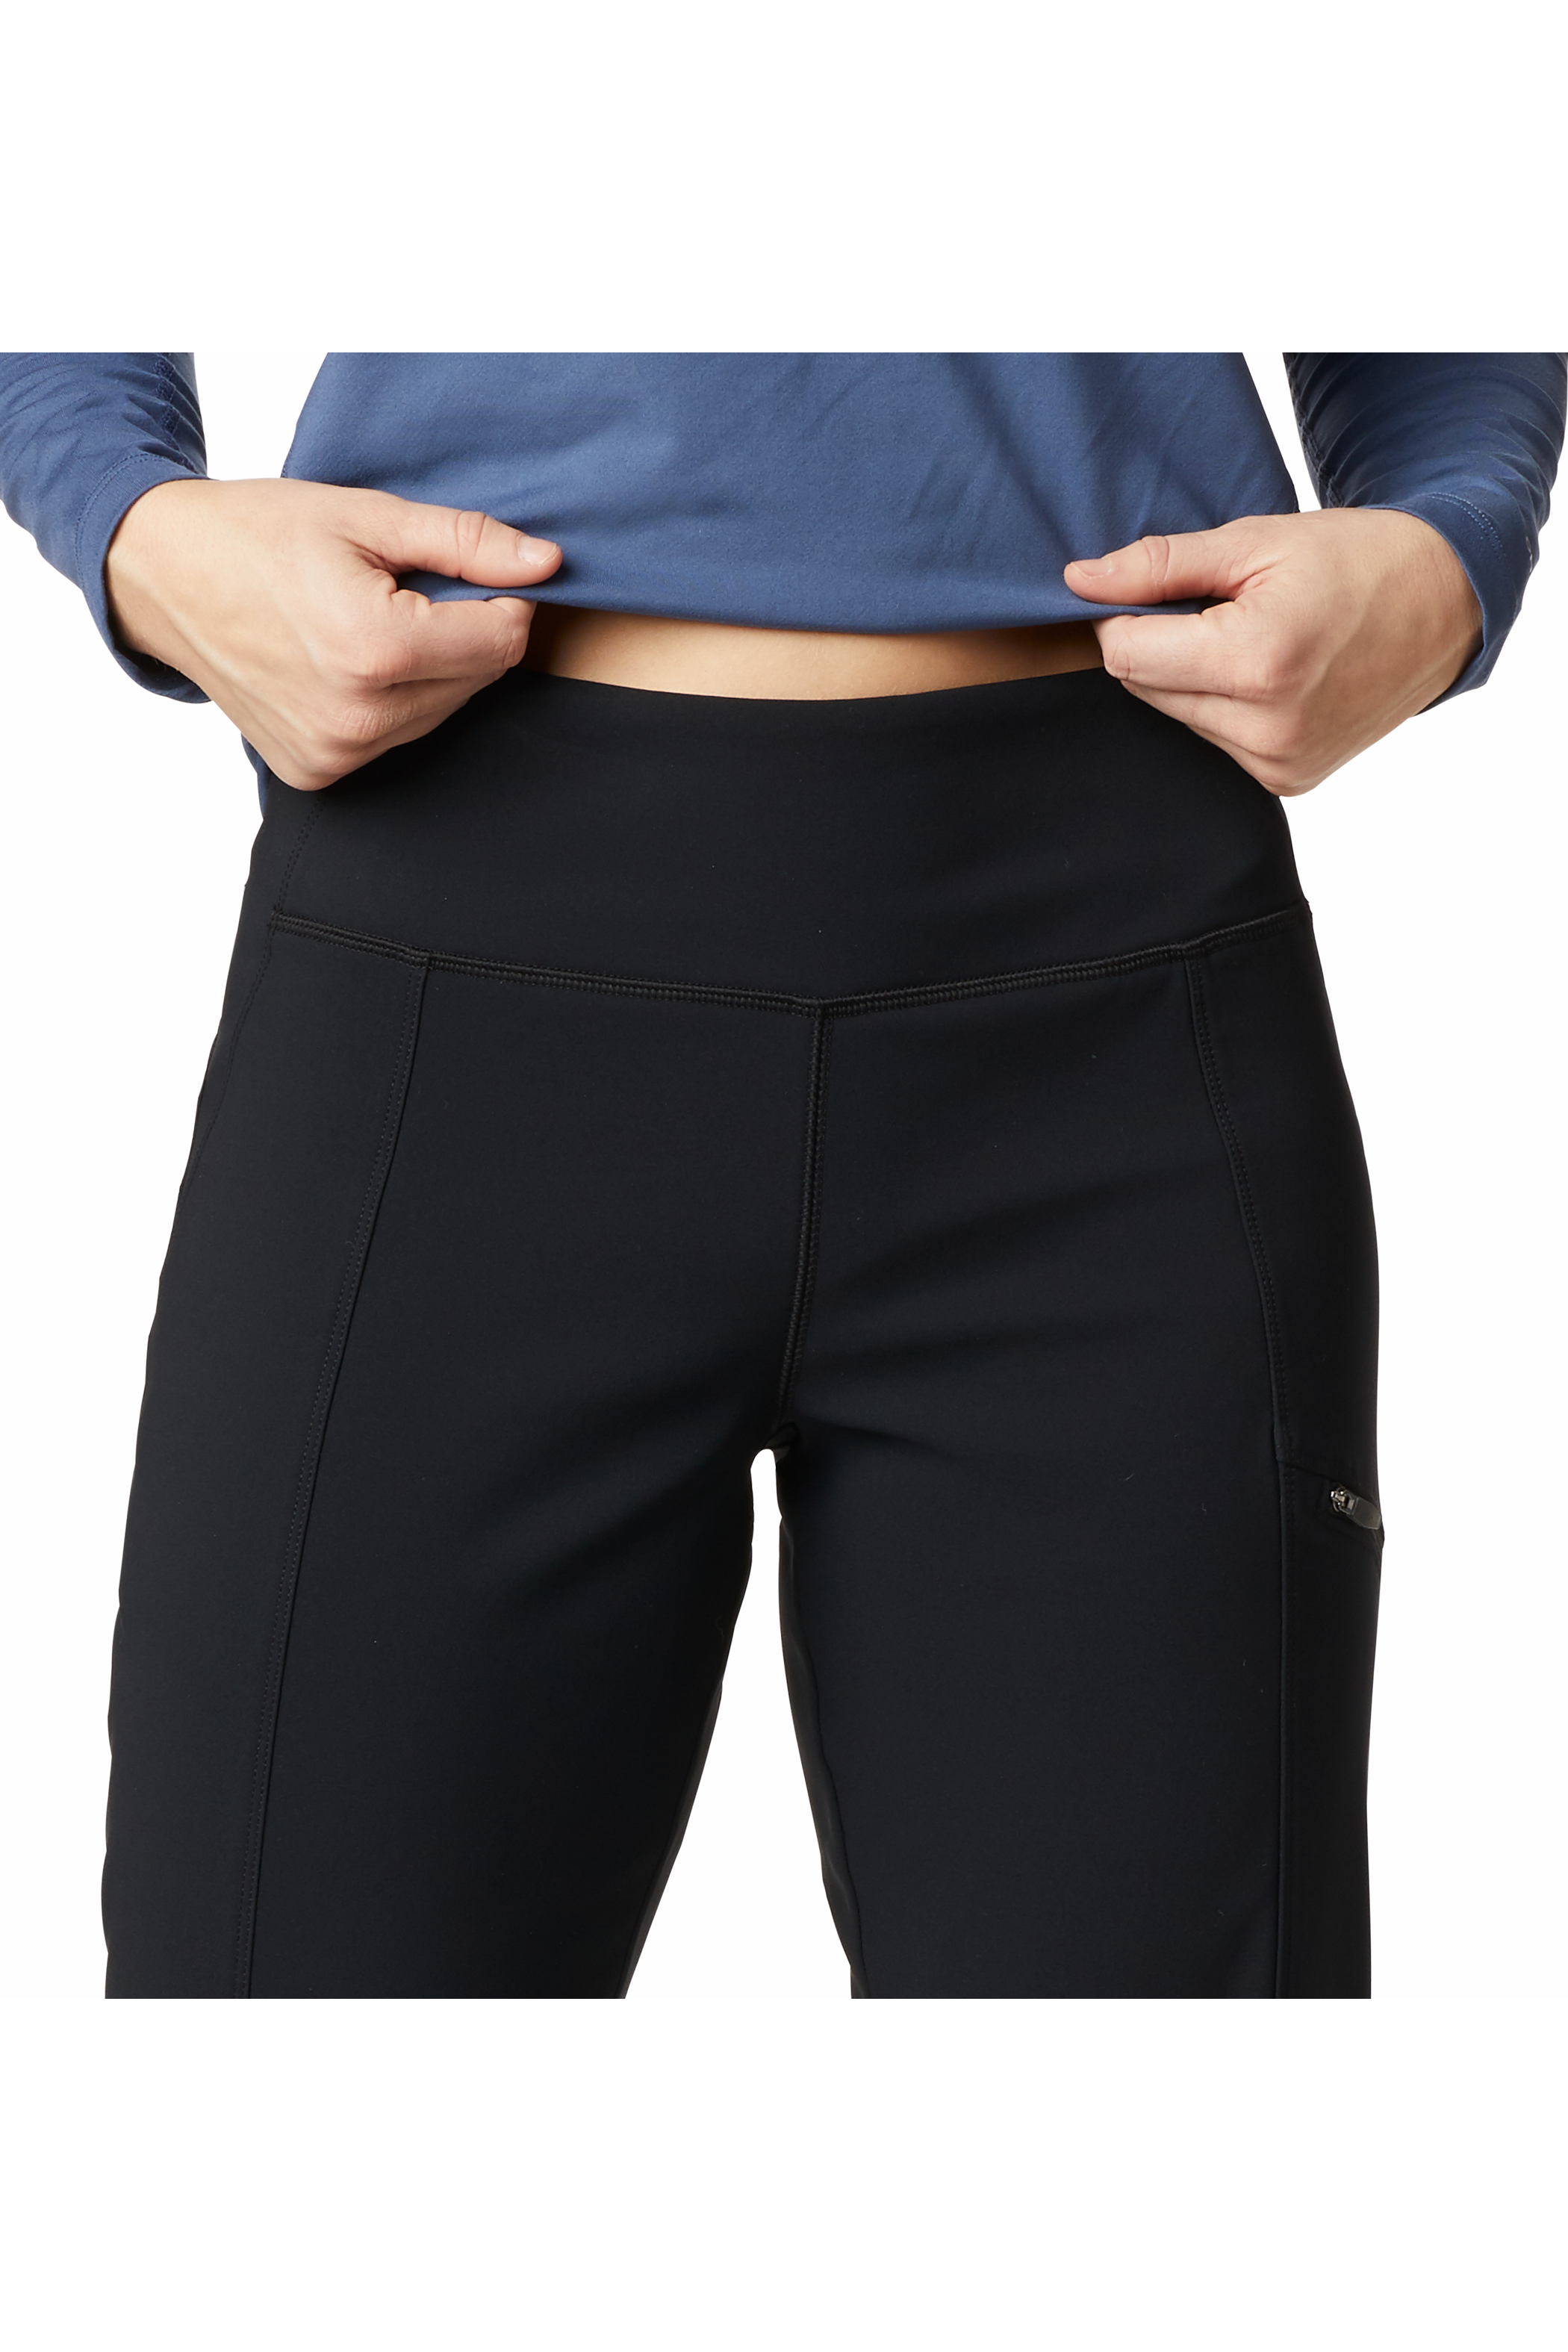 Columbia Back Beauty™ High Rise Warm Winter Pants - Style 1811761010, waistband